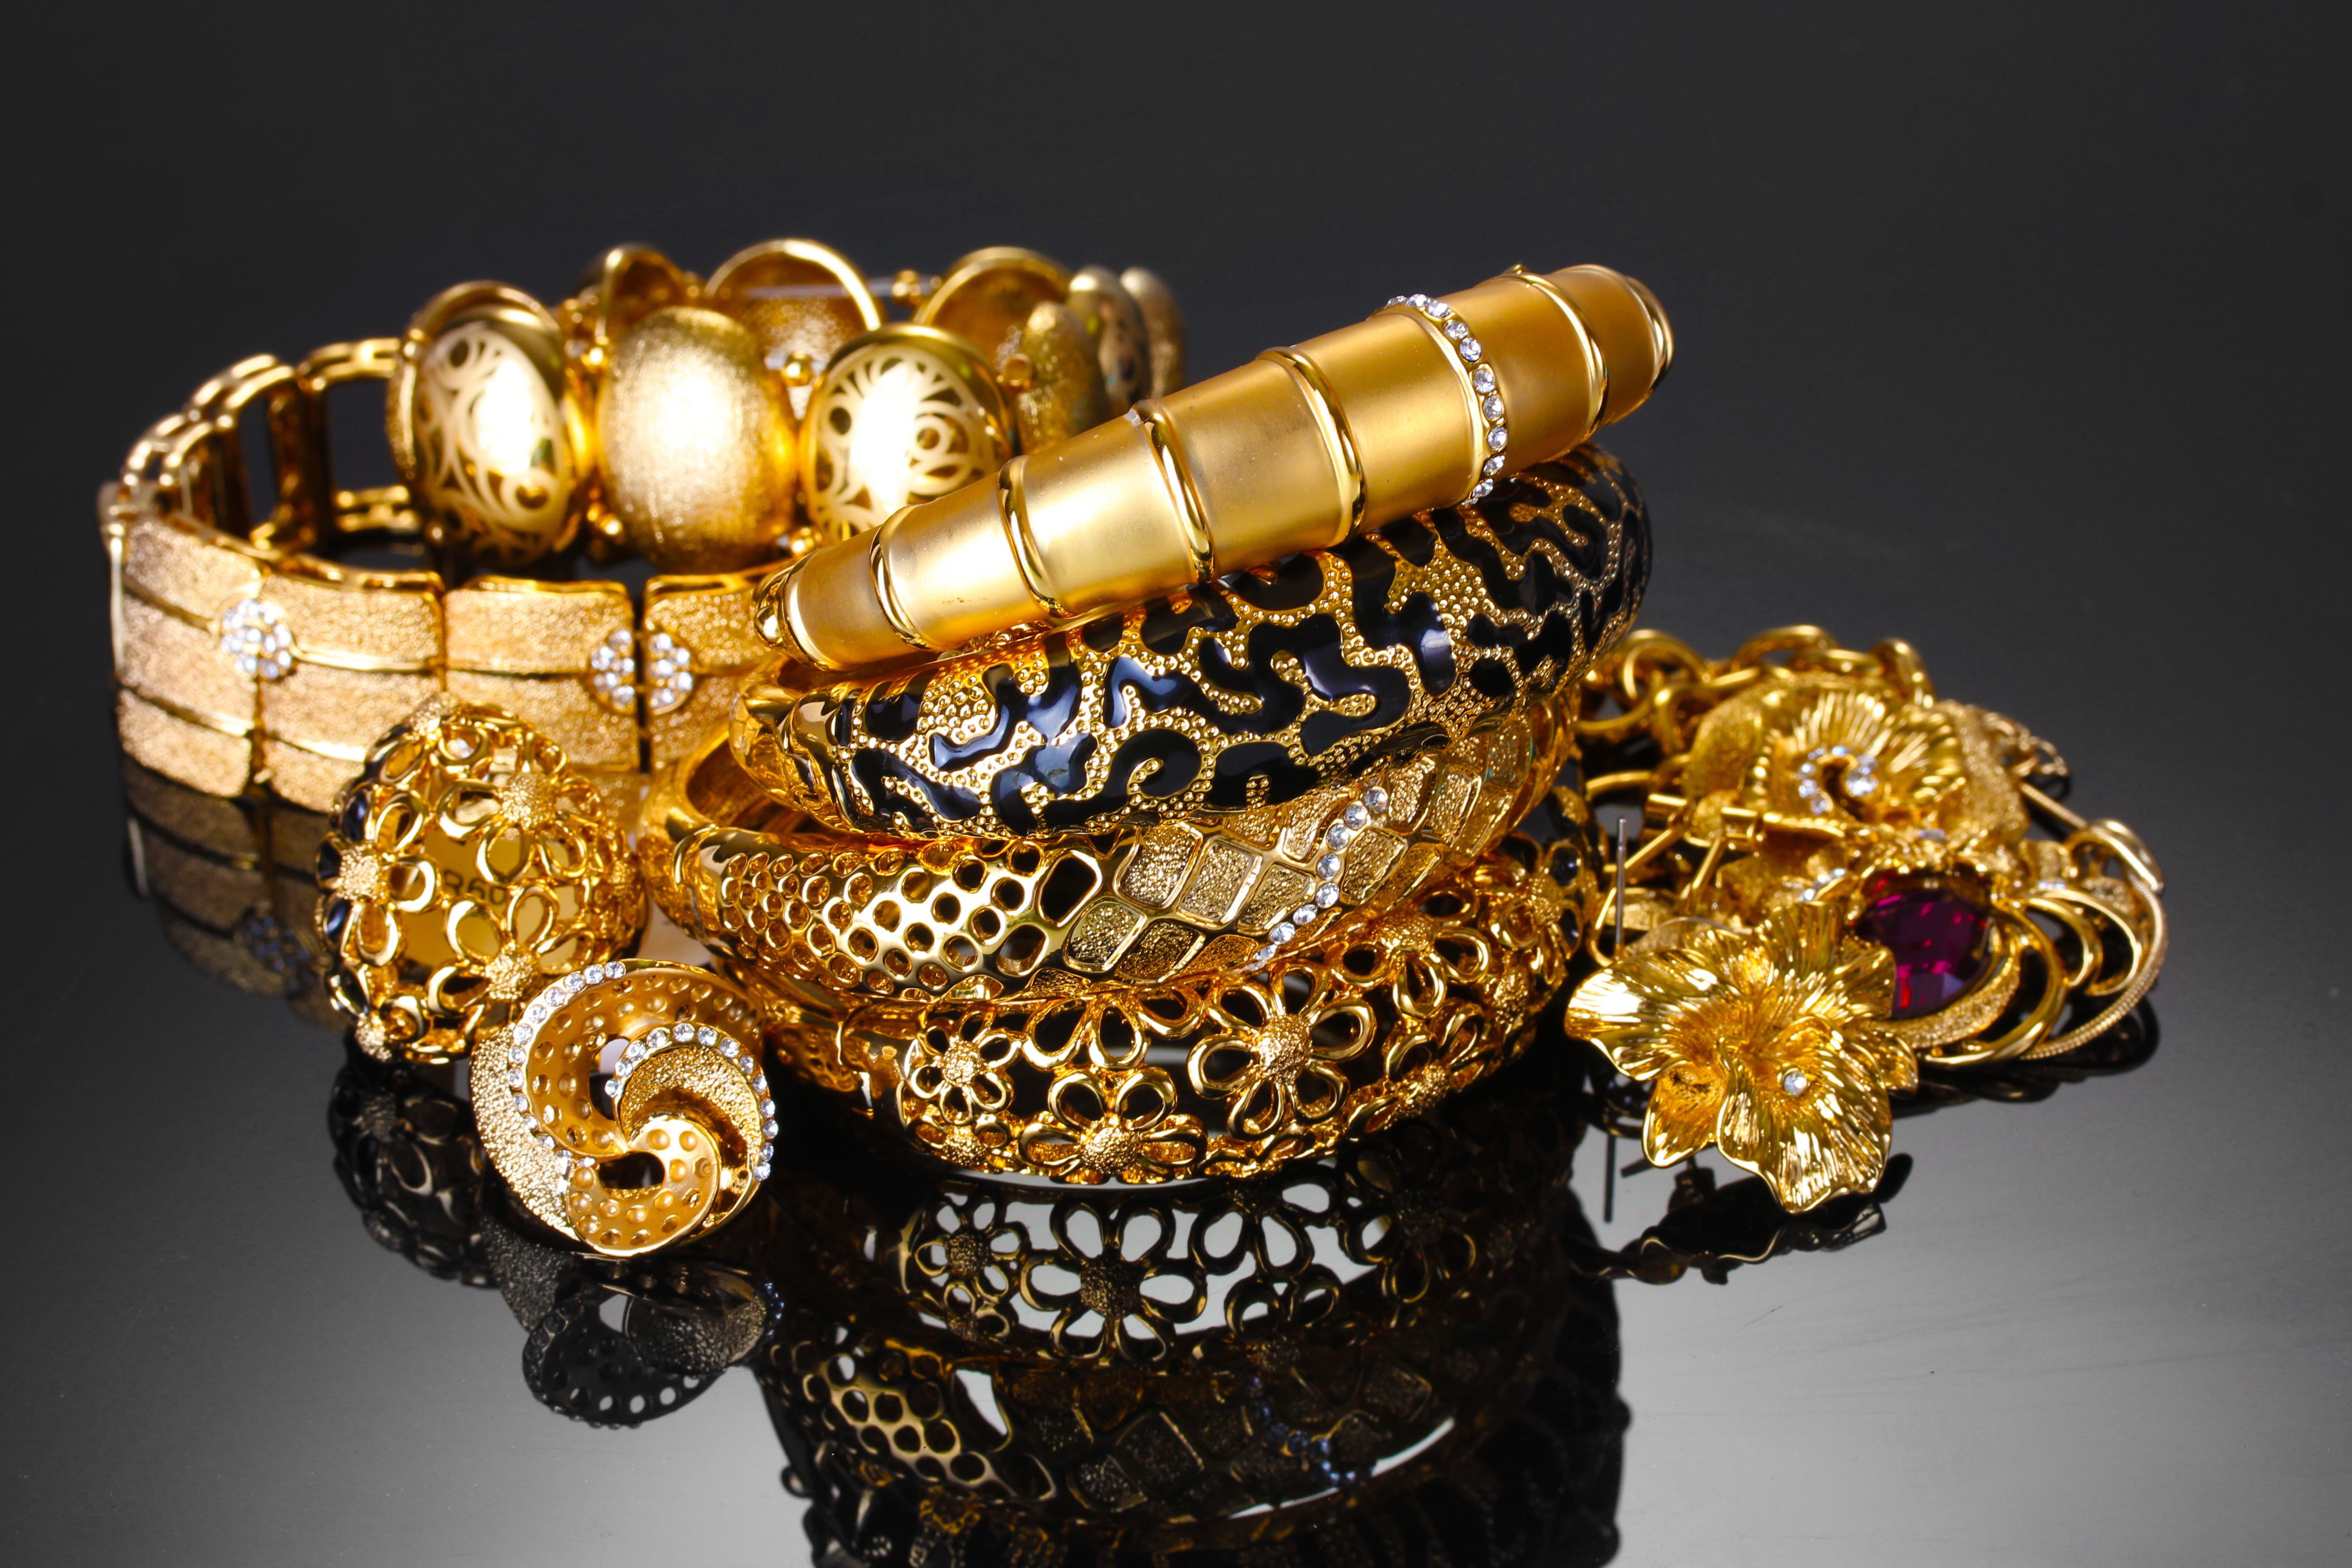 depositphotos_10922362-stock-photo-beautiful-golden-bracelets-rings-and